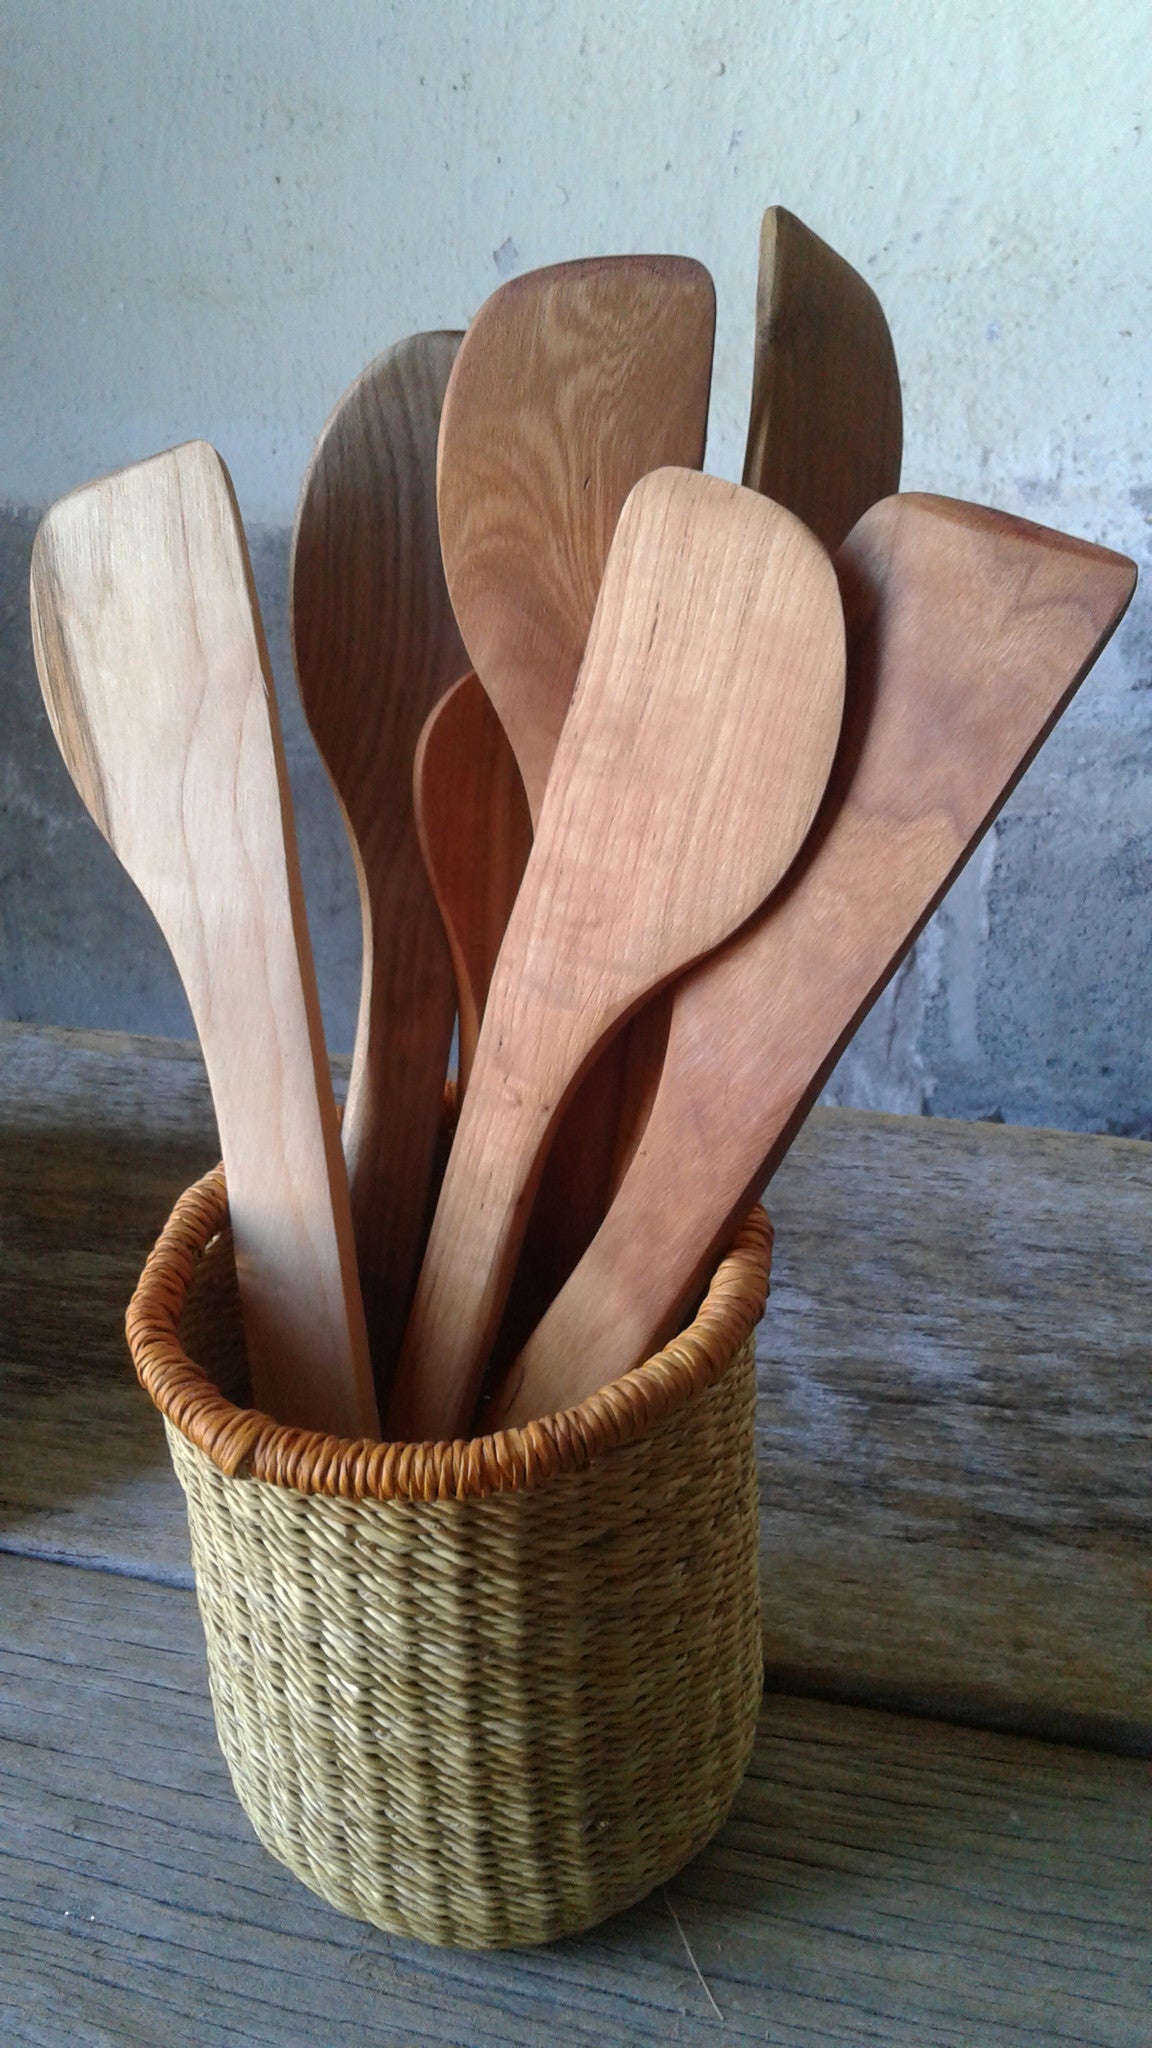 Boyd Wooden Spoons